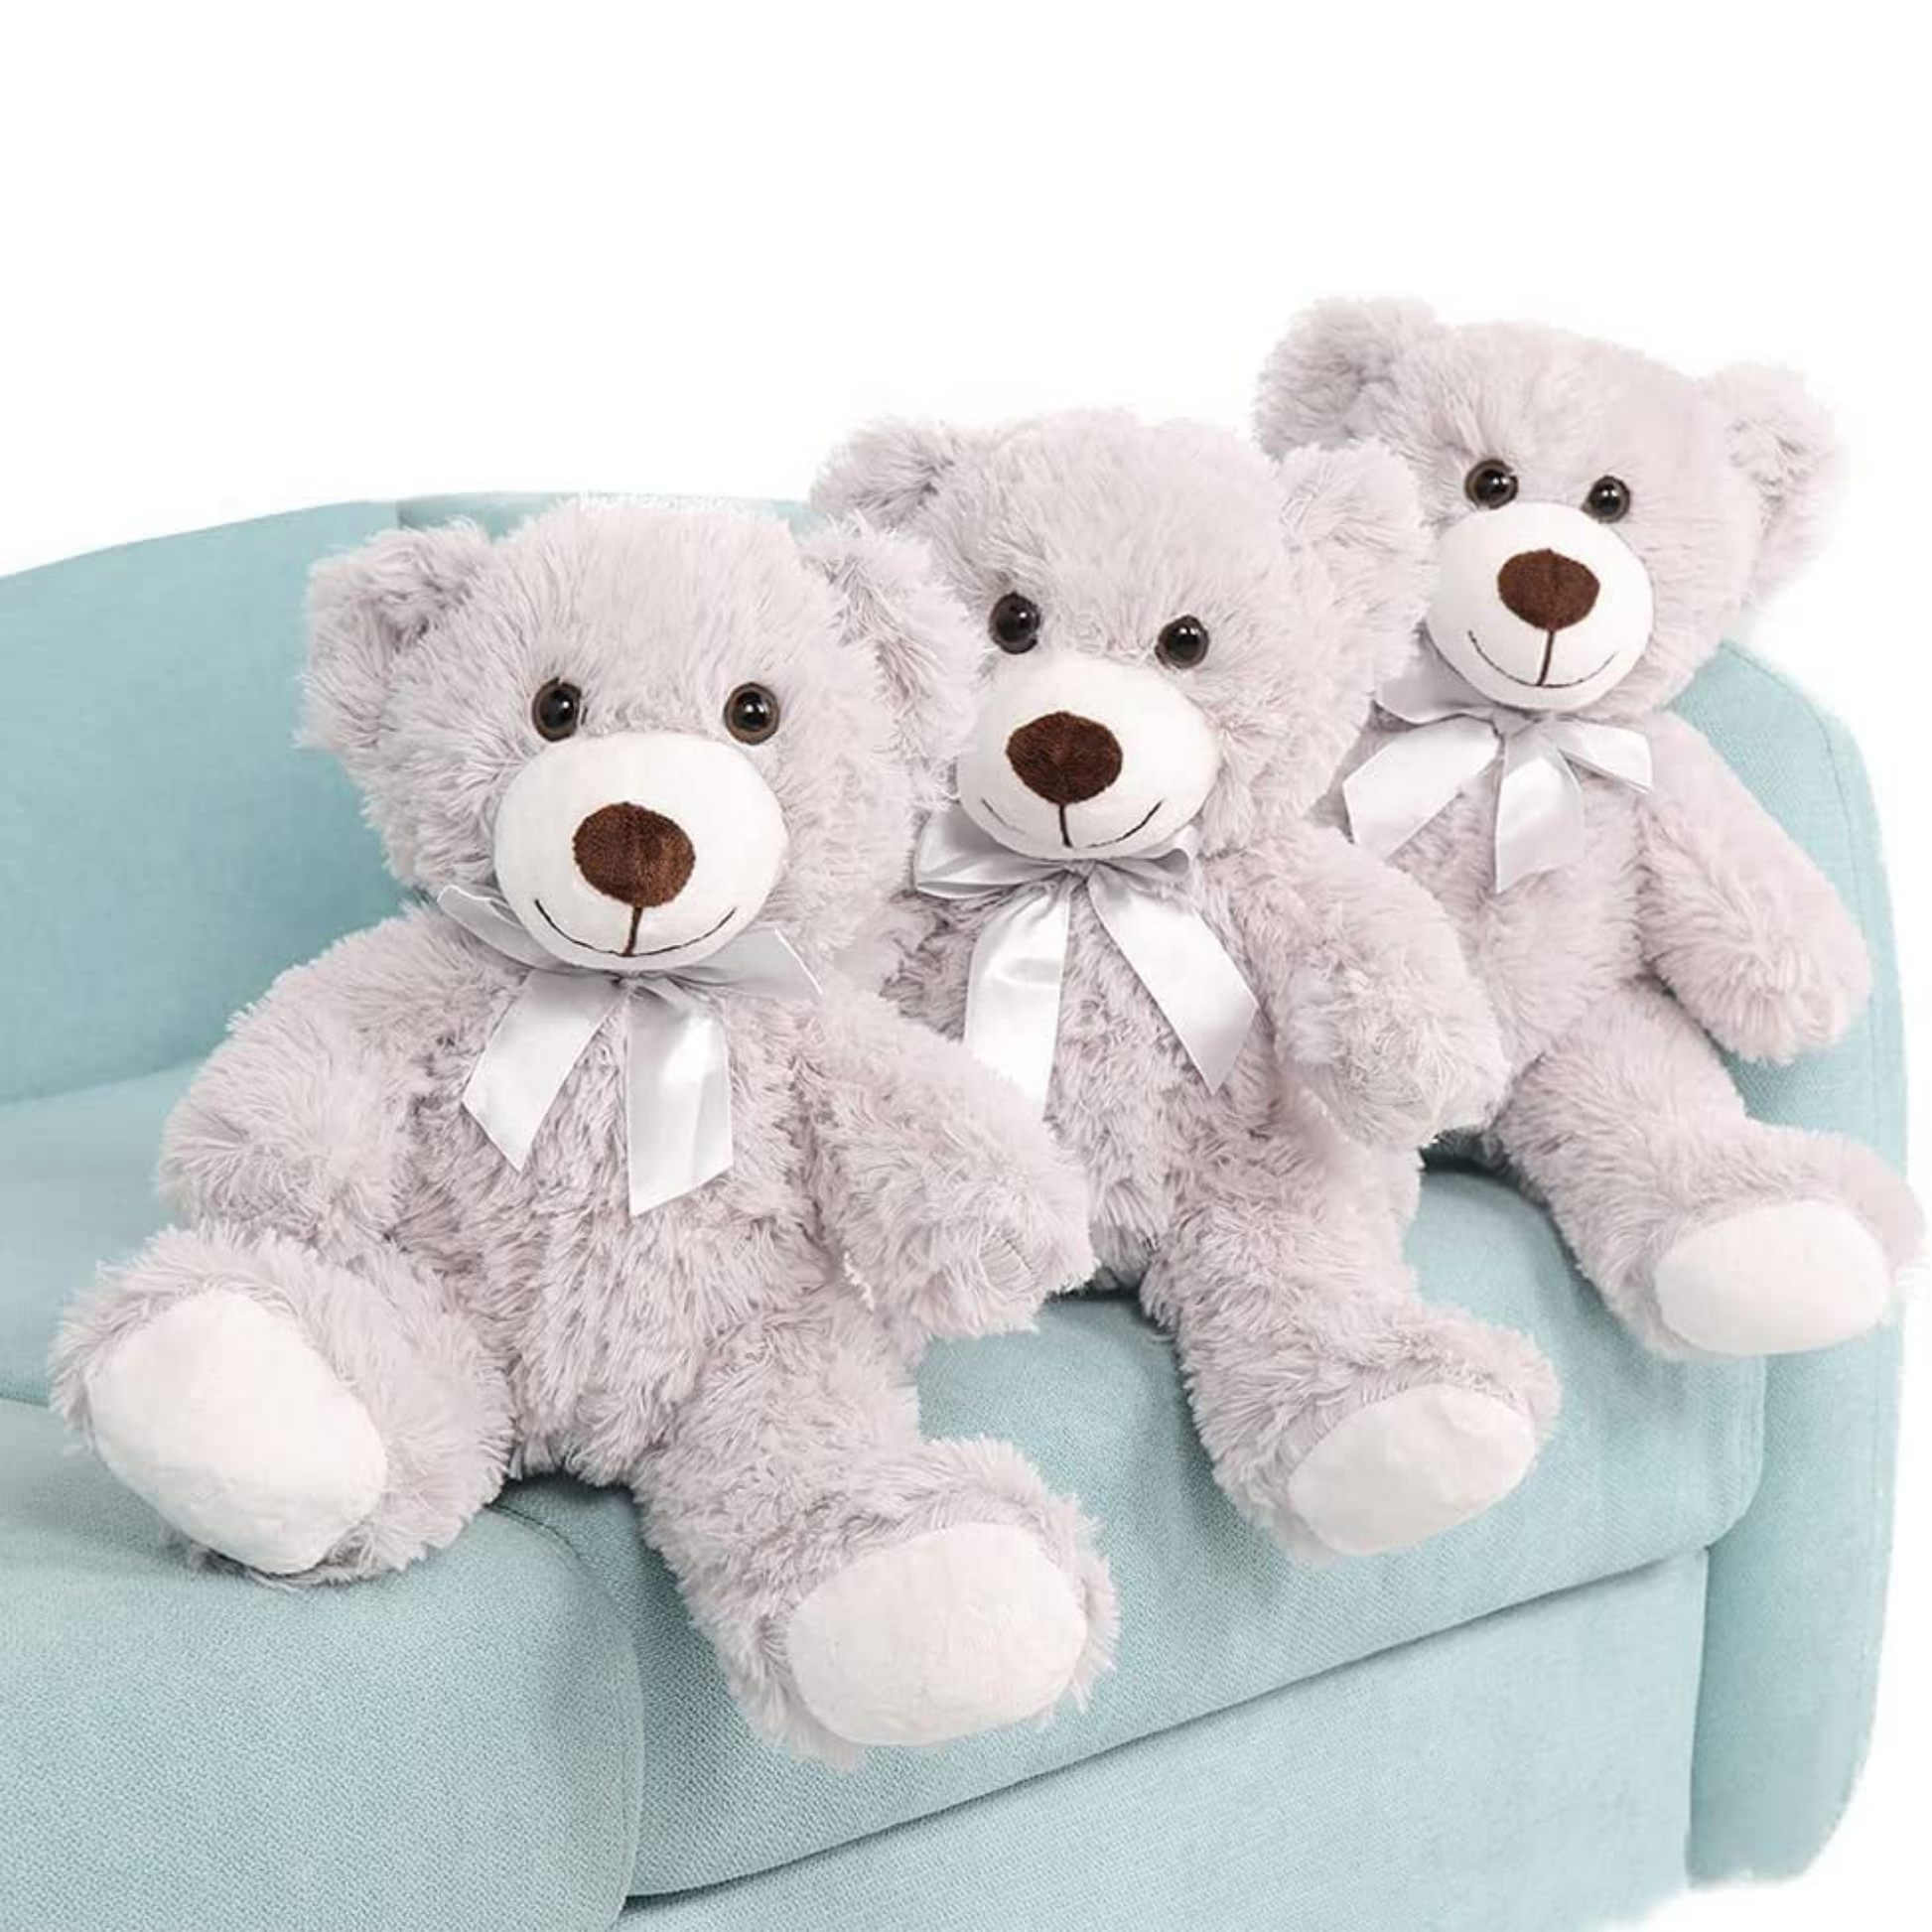 3-Piece Teddy Bears, Light Grey, 13.8 Inches